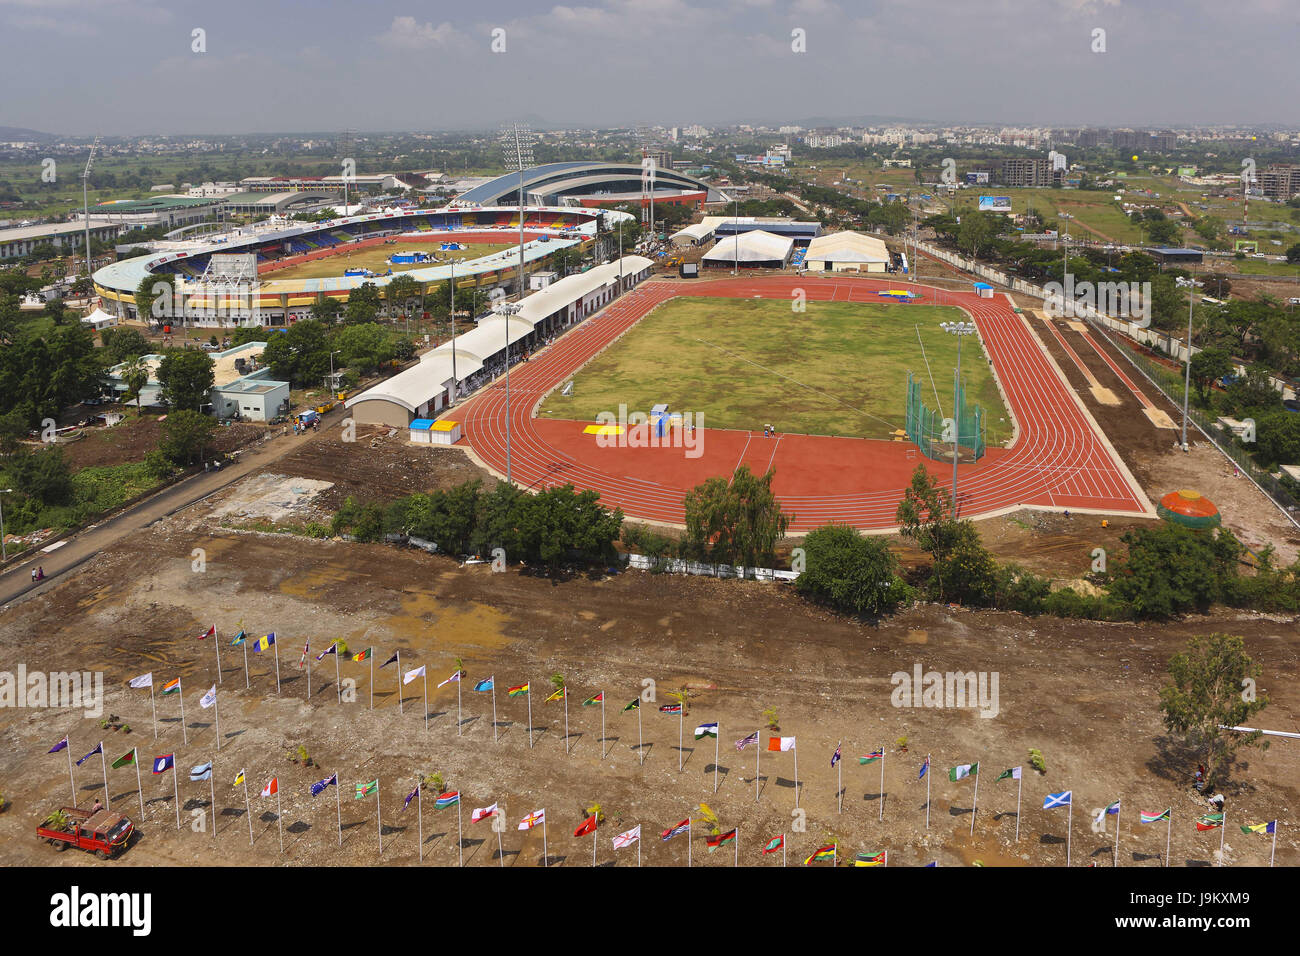 Shree shiv chhatrapati sports complex stadium, Pune, Maharashtra, Inde, Asie Banque D'Images